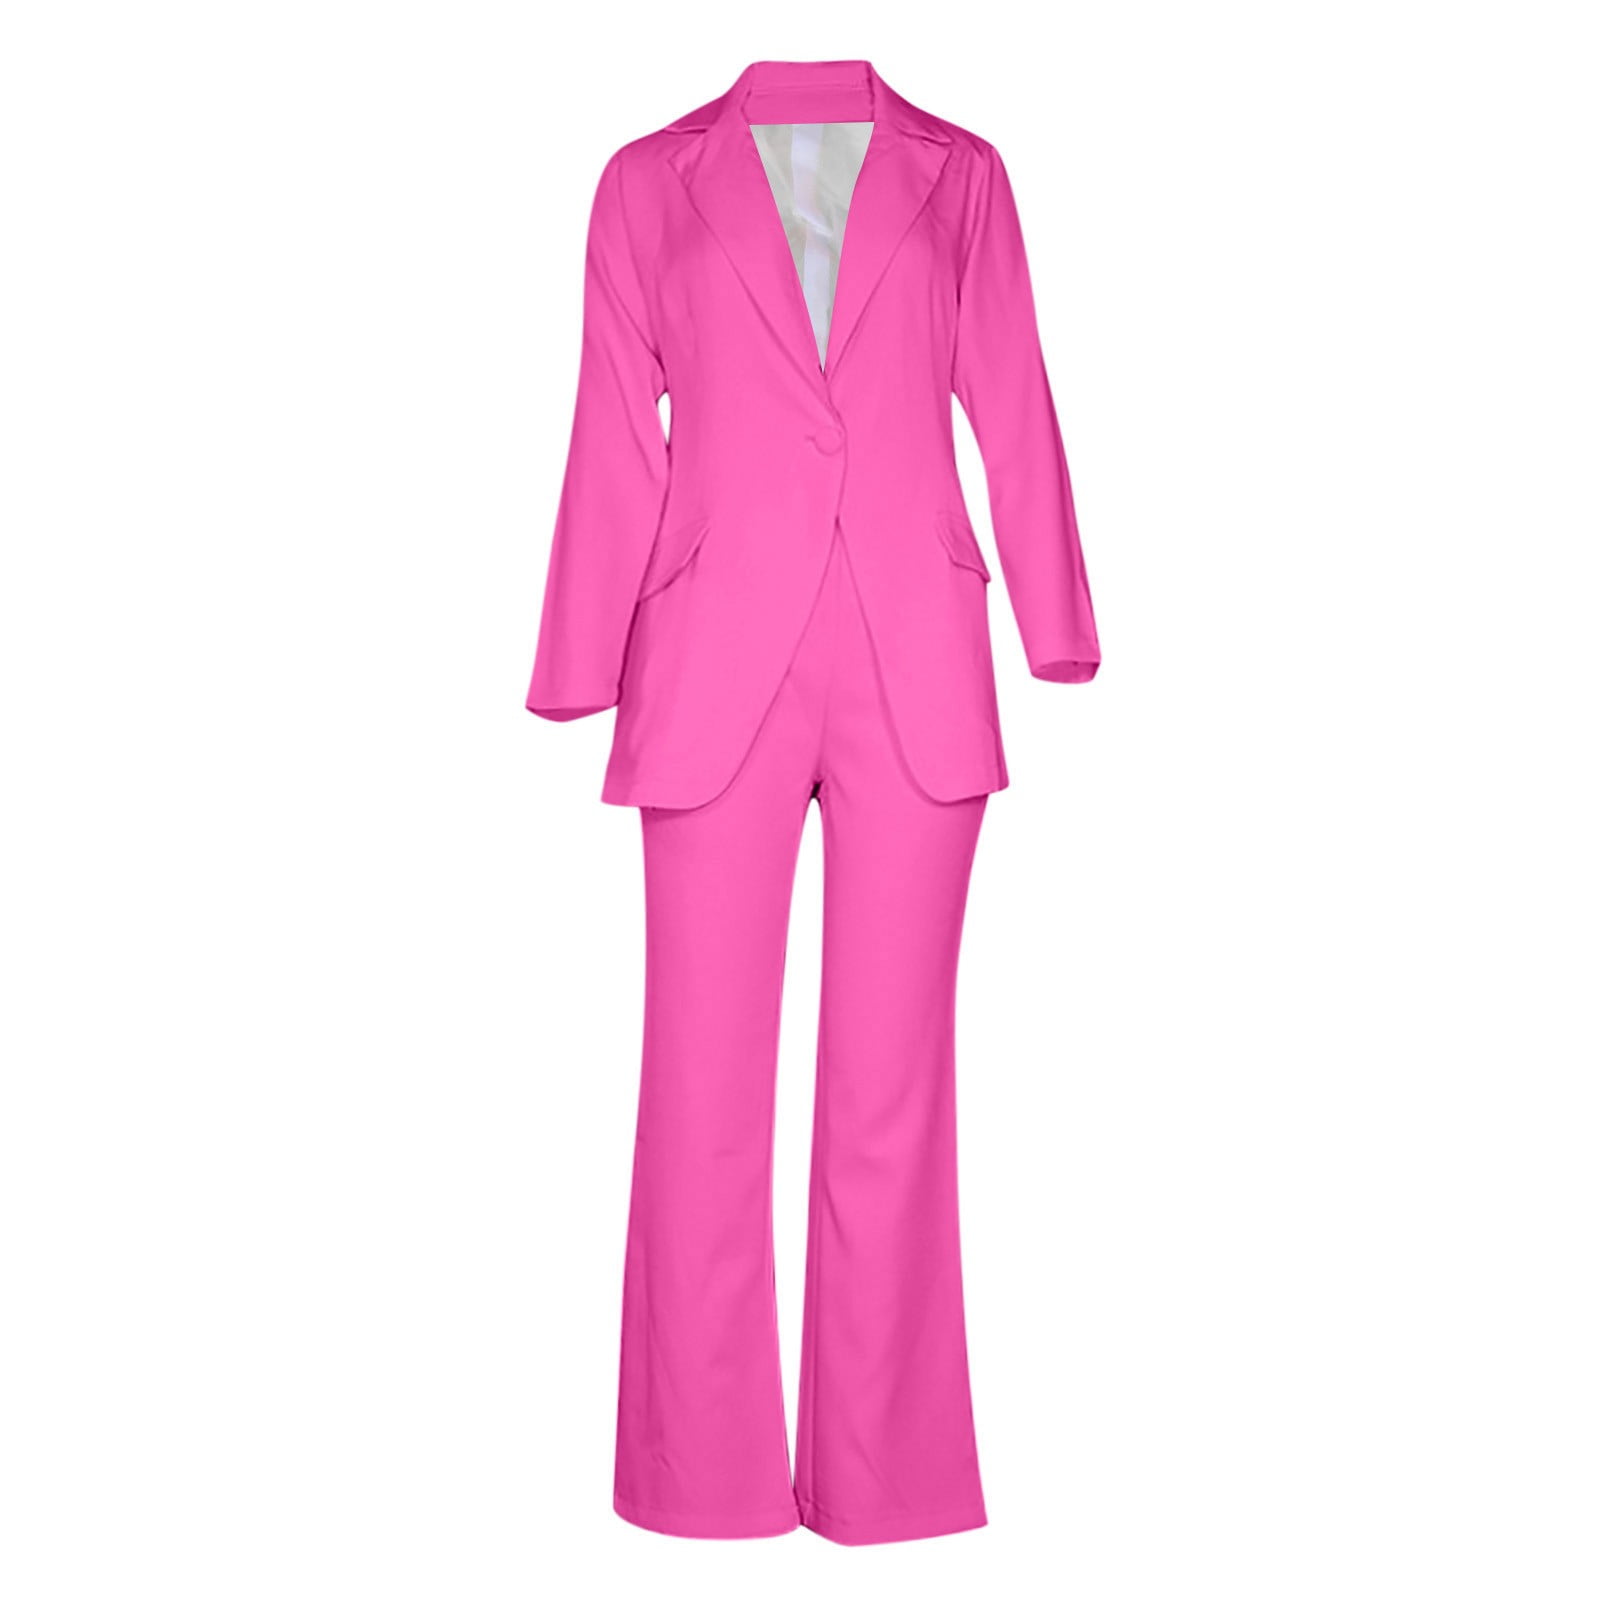 ASOS DESIGN Petite linen double breasted suit blazer in hot pink | ASOS